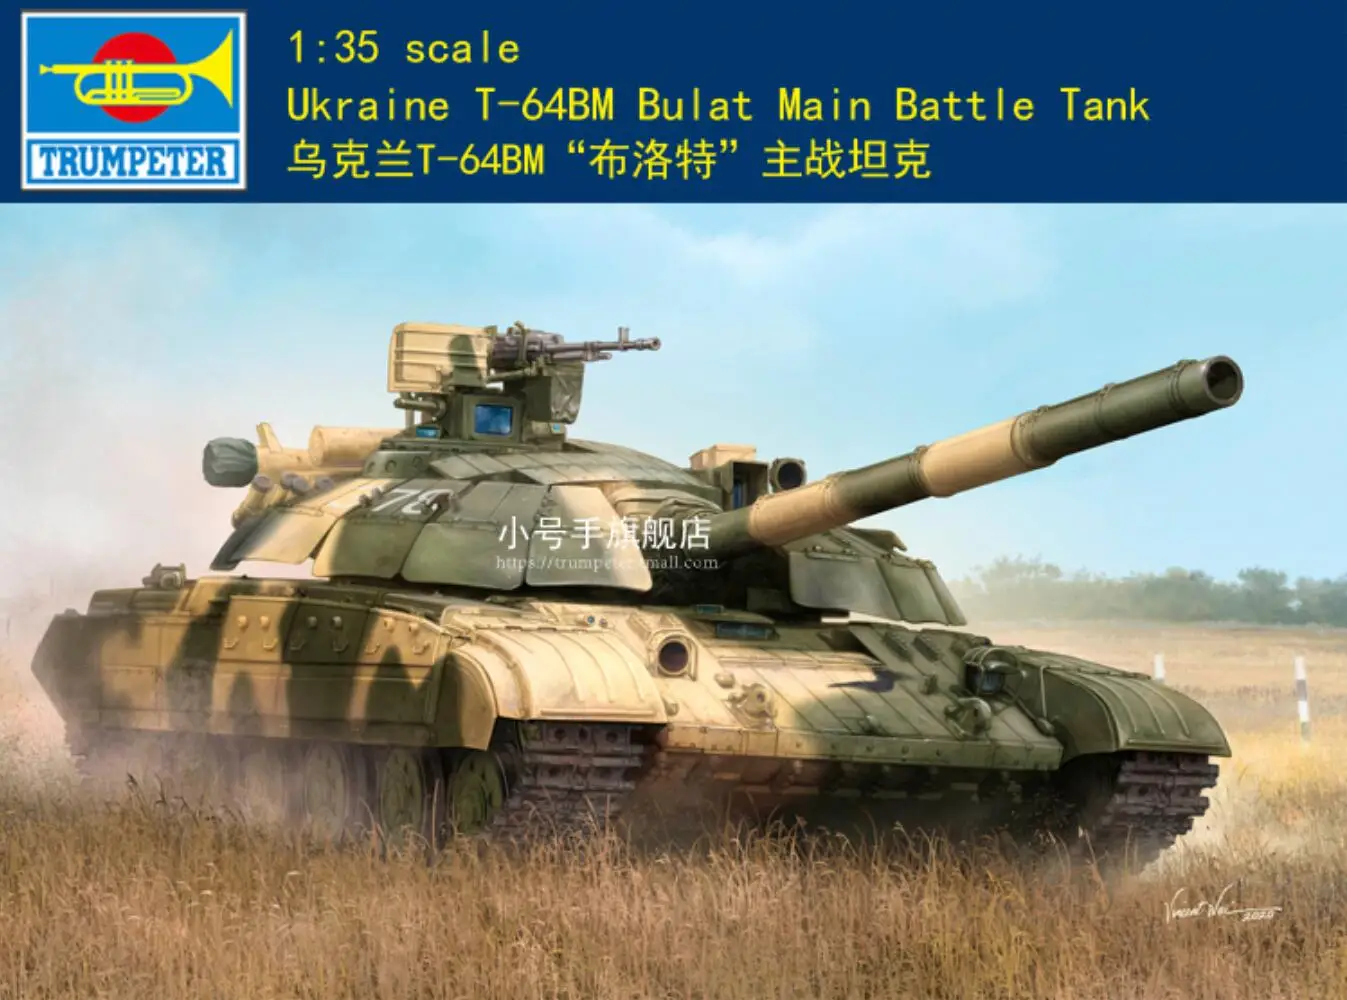 Trumpeter Model 09592 1:35 Scale Model Kit Ukraine T-64BM Bulat Main Battle Tank